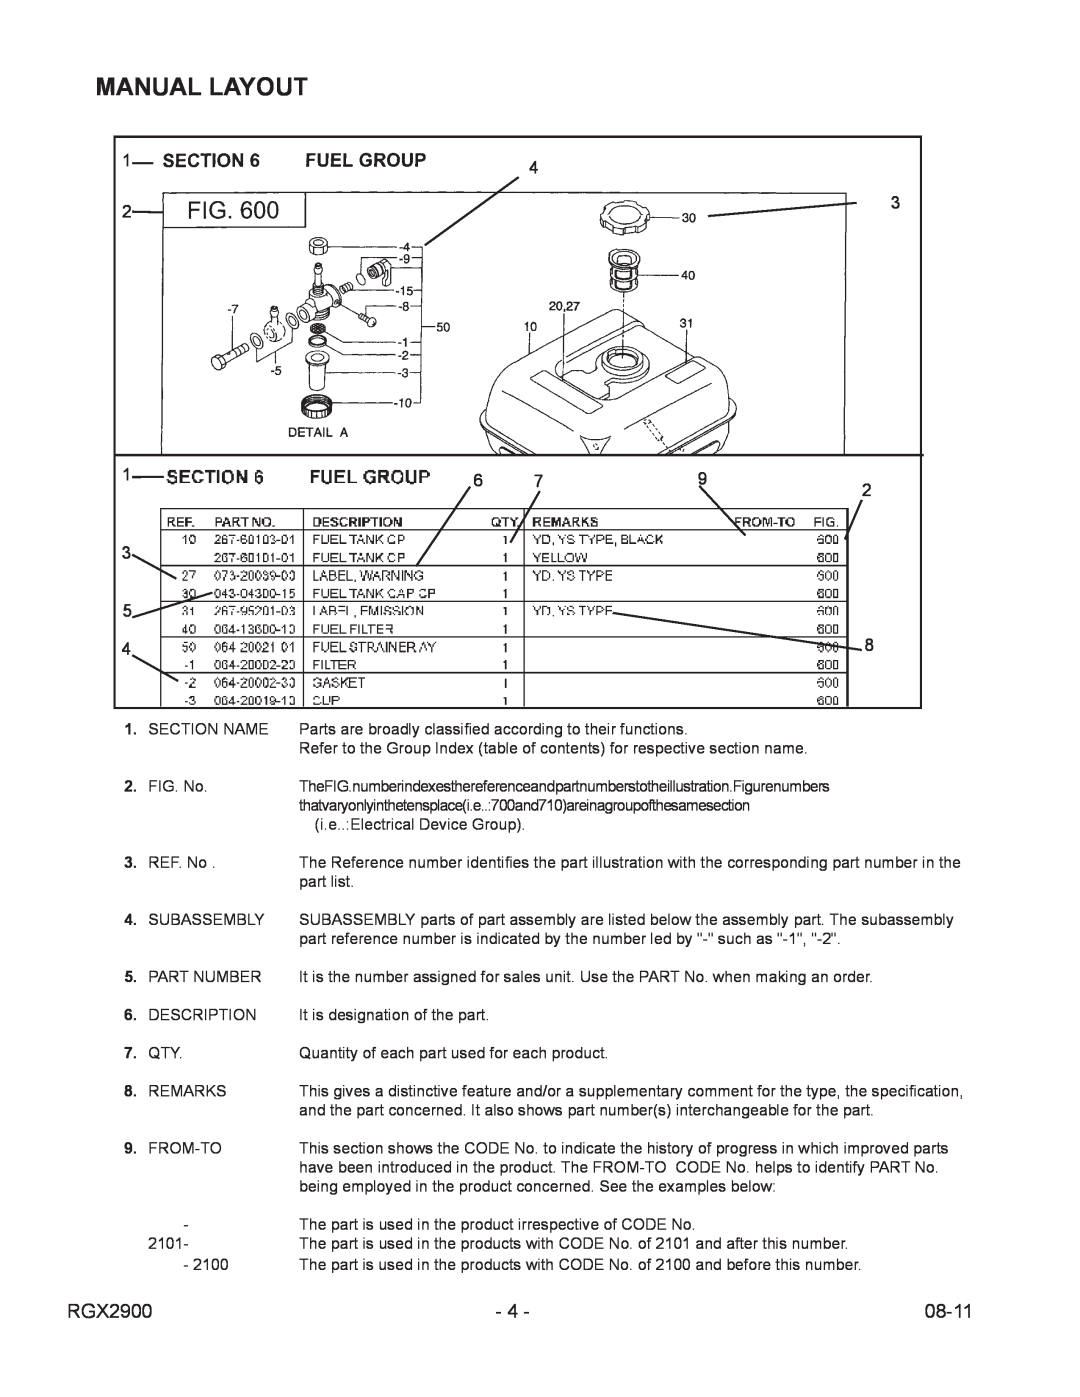 Subaru Robin Power Products RGX2900 manual Manual Layout, 08-11 